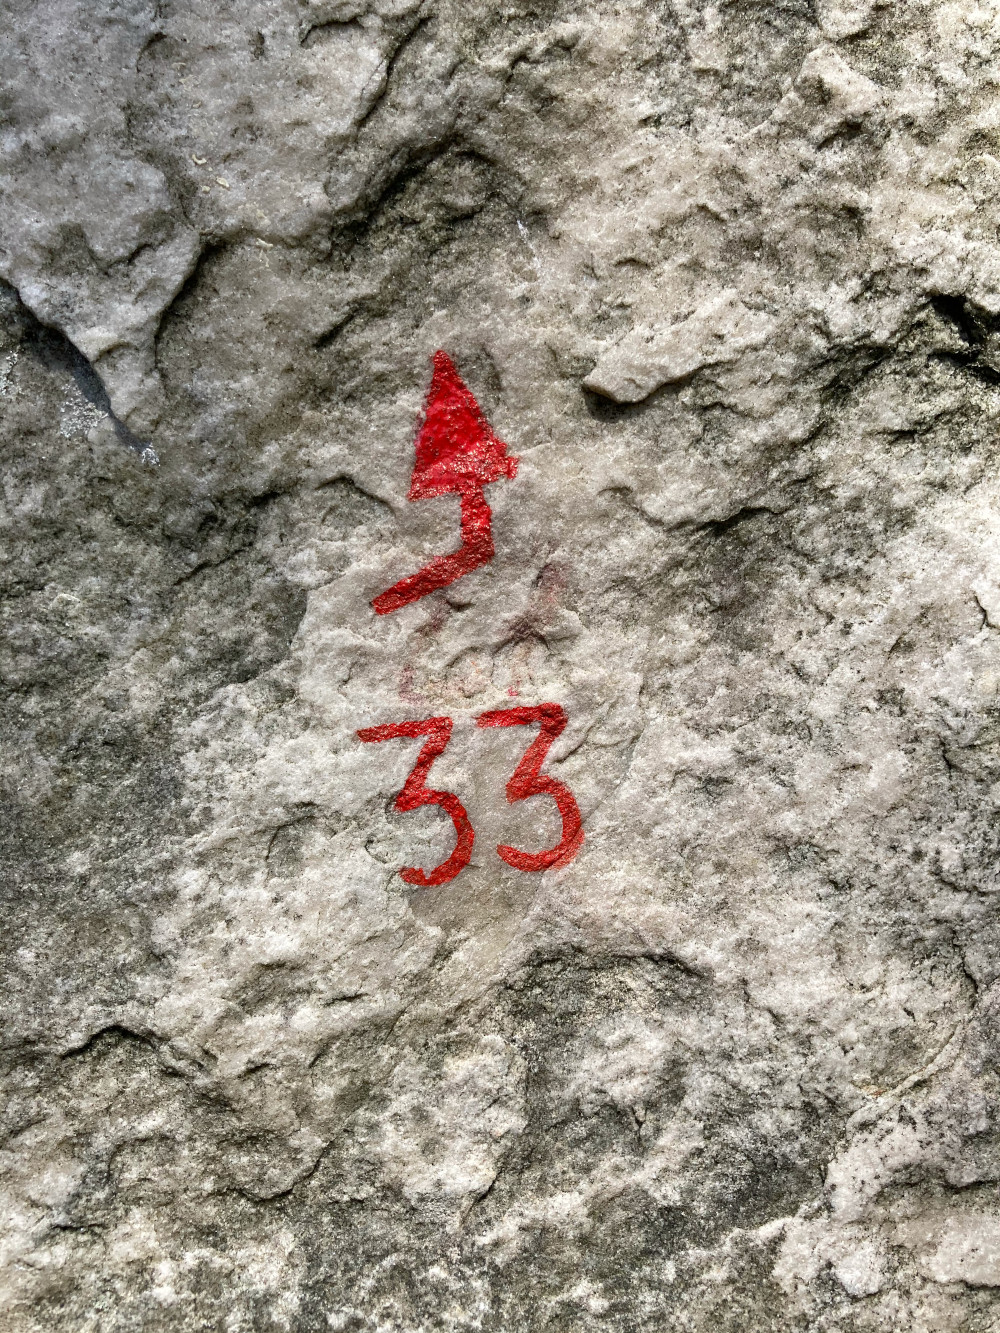 A close up shot of an arrow on a Fontainebleau boulder